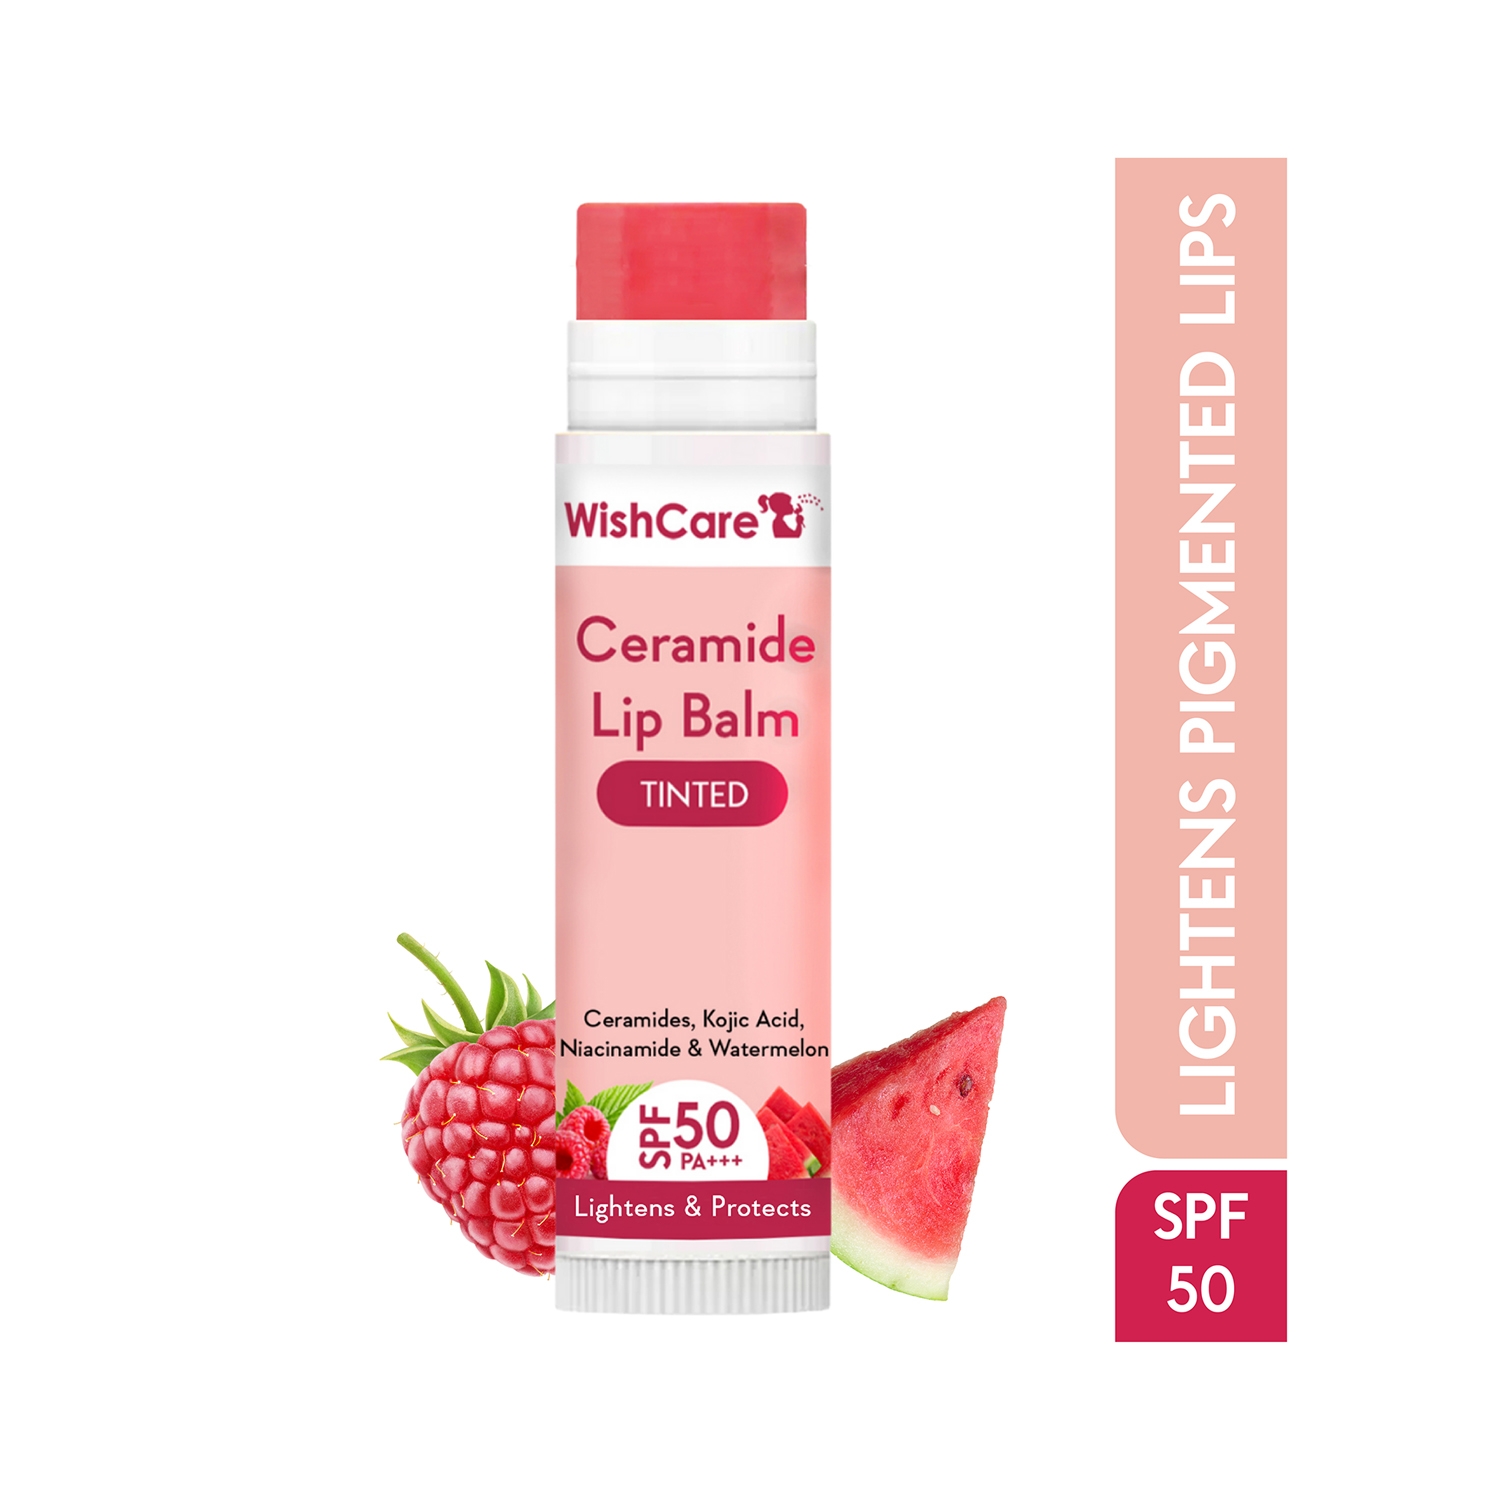 WishCare | WishCare Tinted Ceramide Lip Balm with  SPF 50 PA+++ Kojic Acid & Niacinamide (5g)